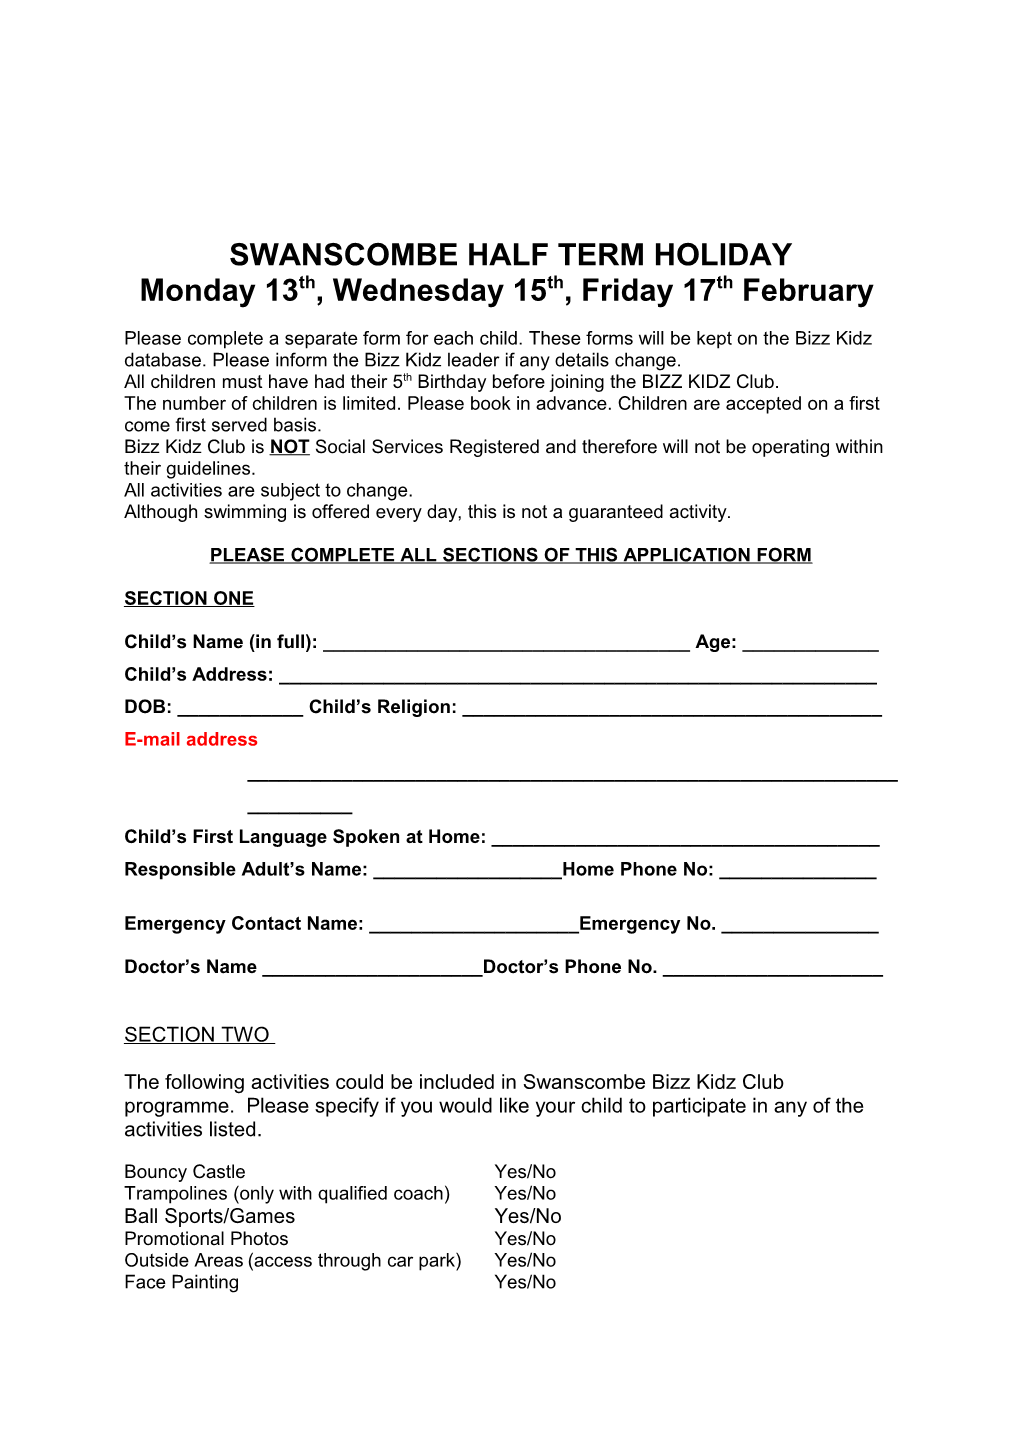 Swanscombe Half Term Holiday